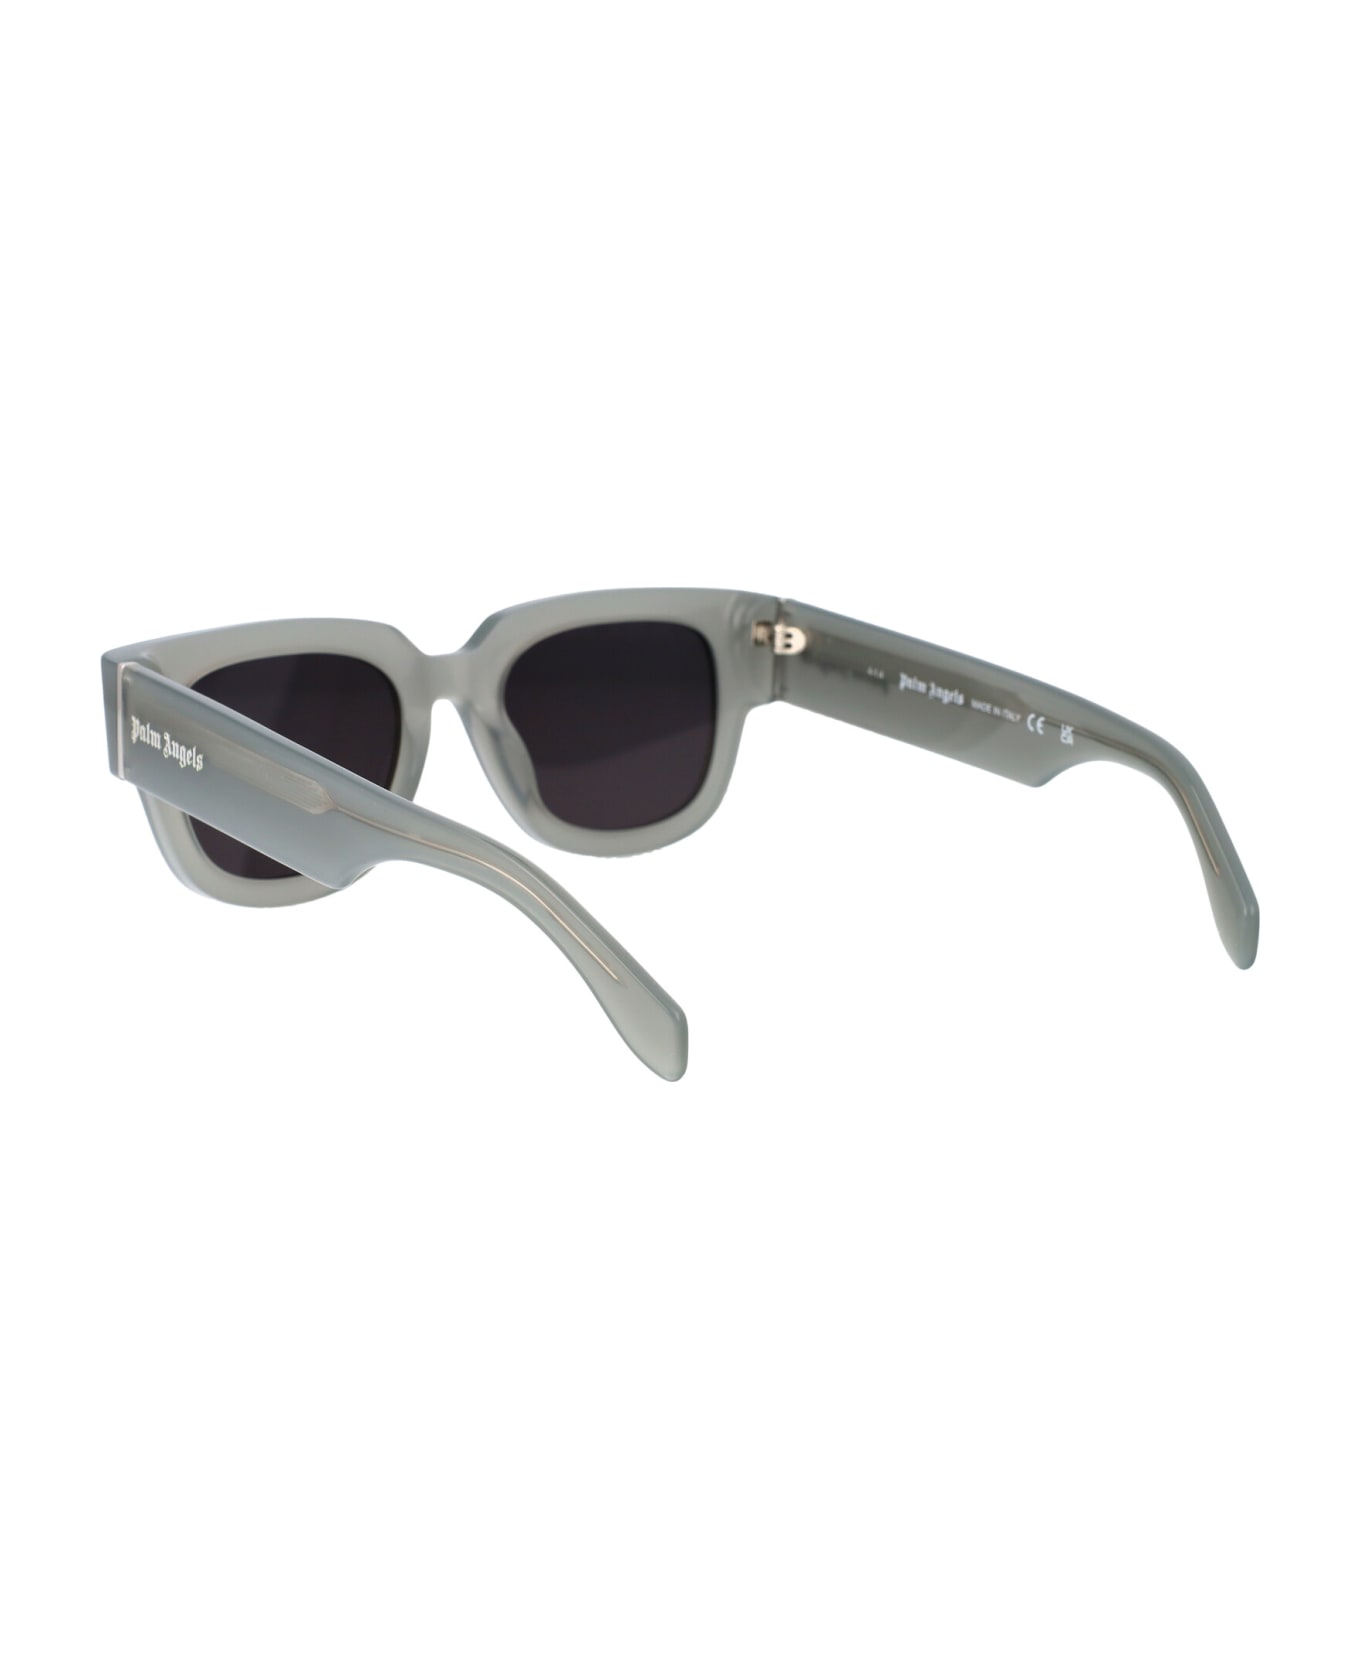 Palm Angels Monterey Sunglasses - 0907 GREY サングラス